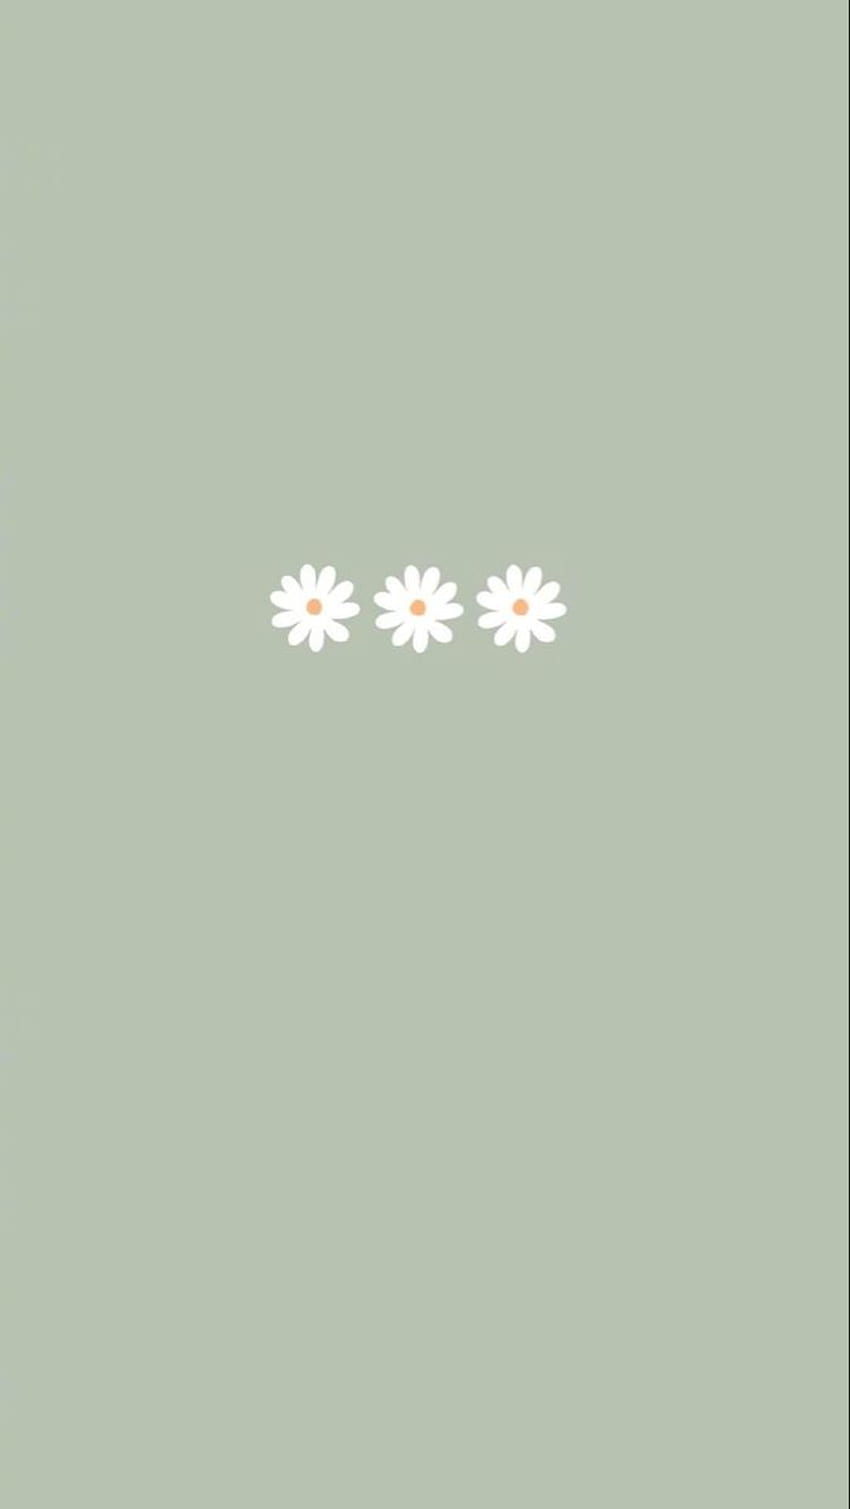 The daisy wallpaper - Green